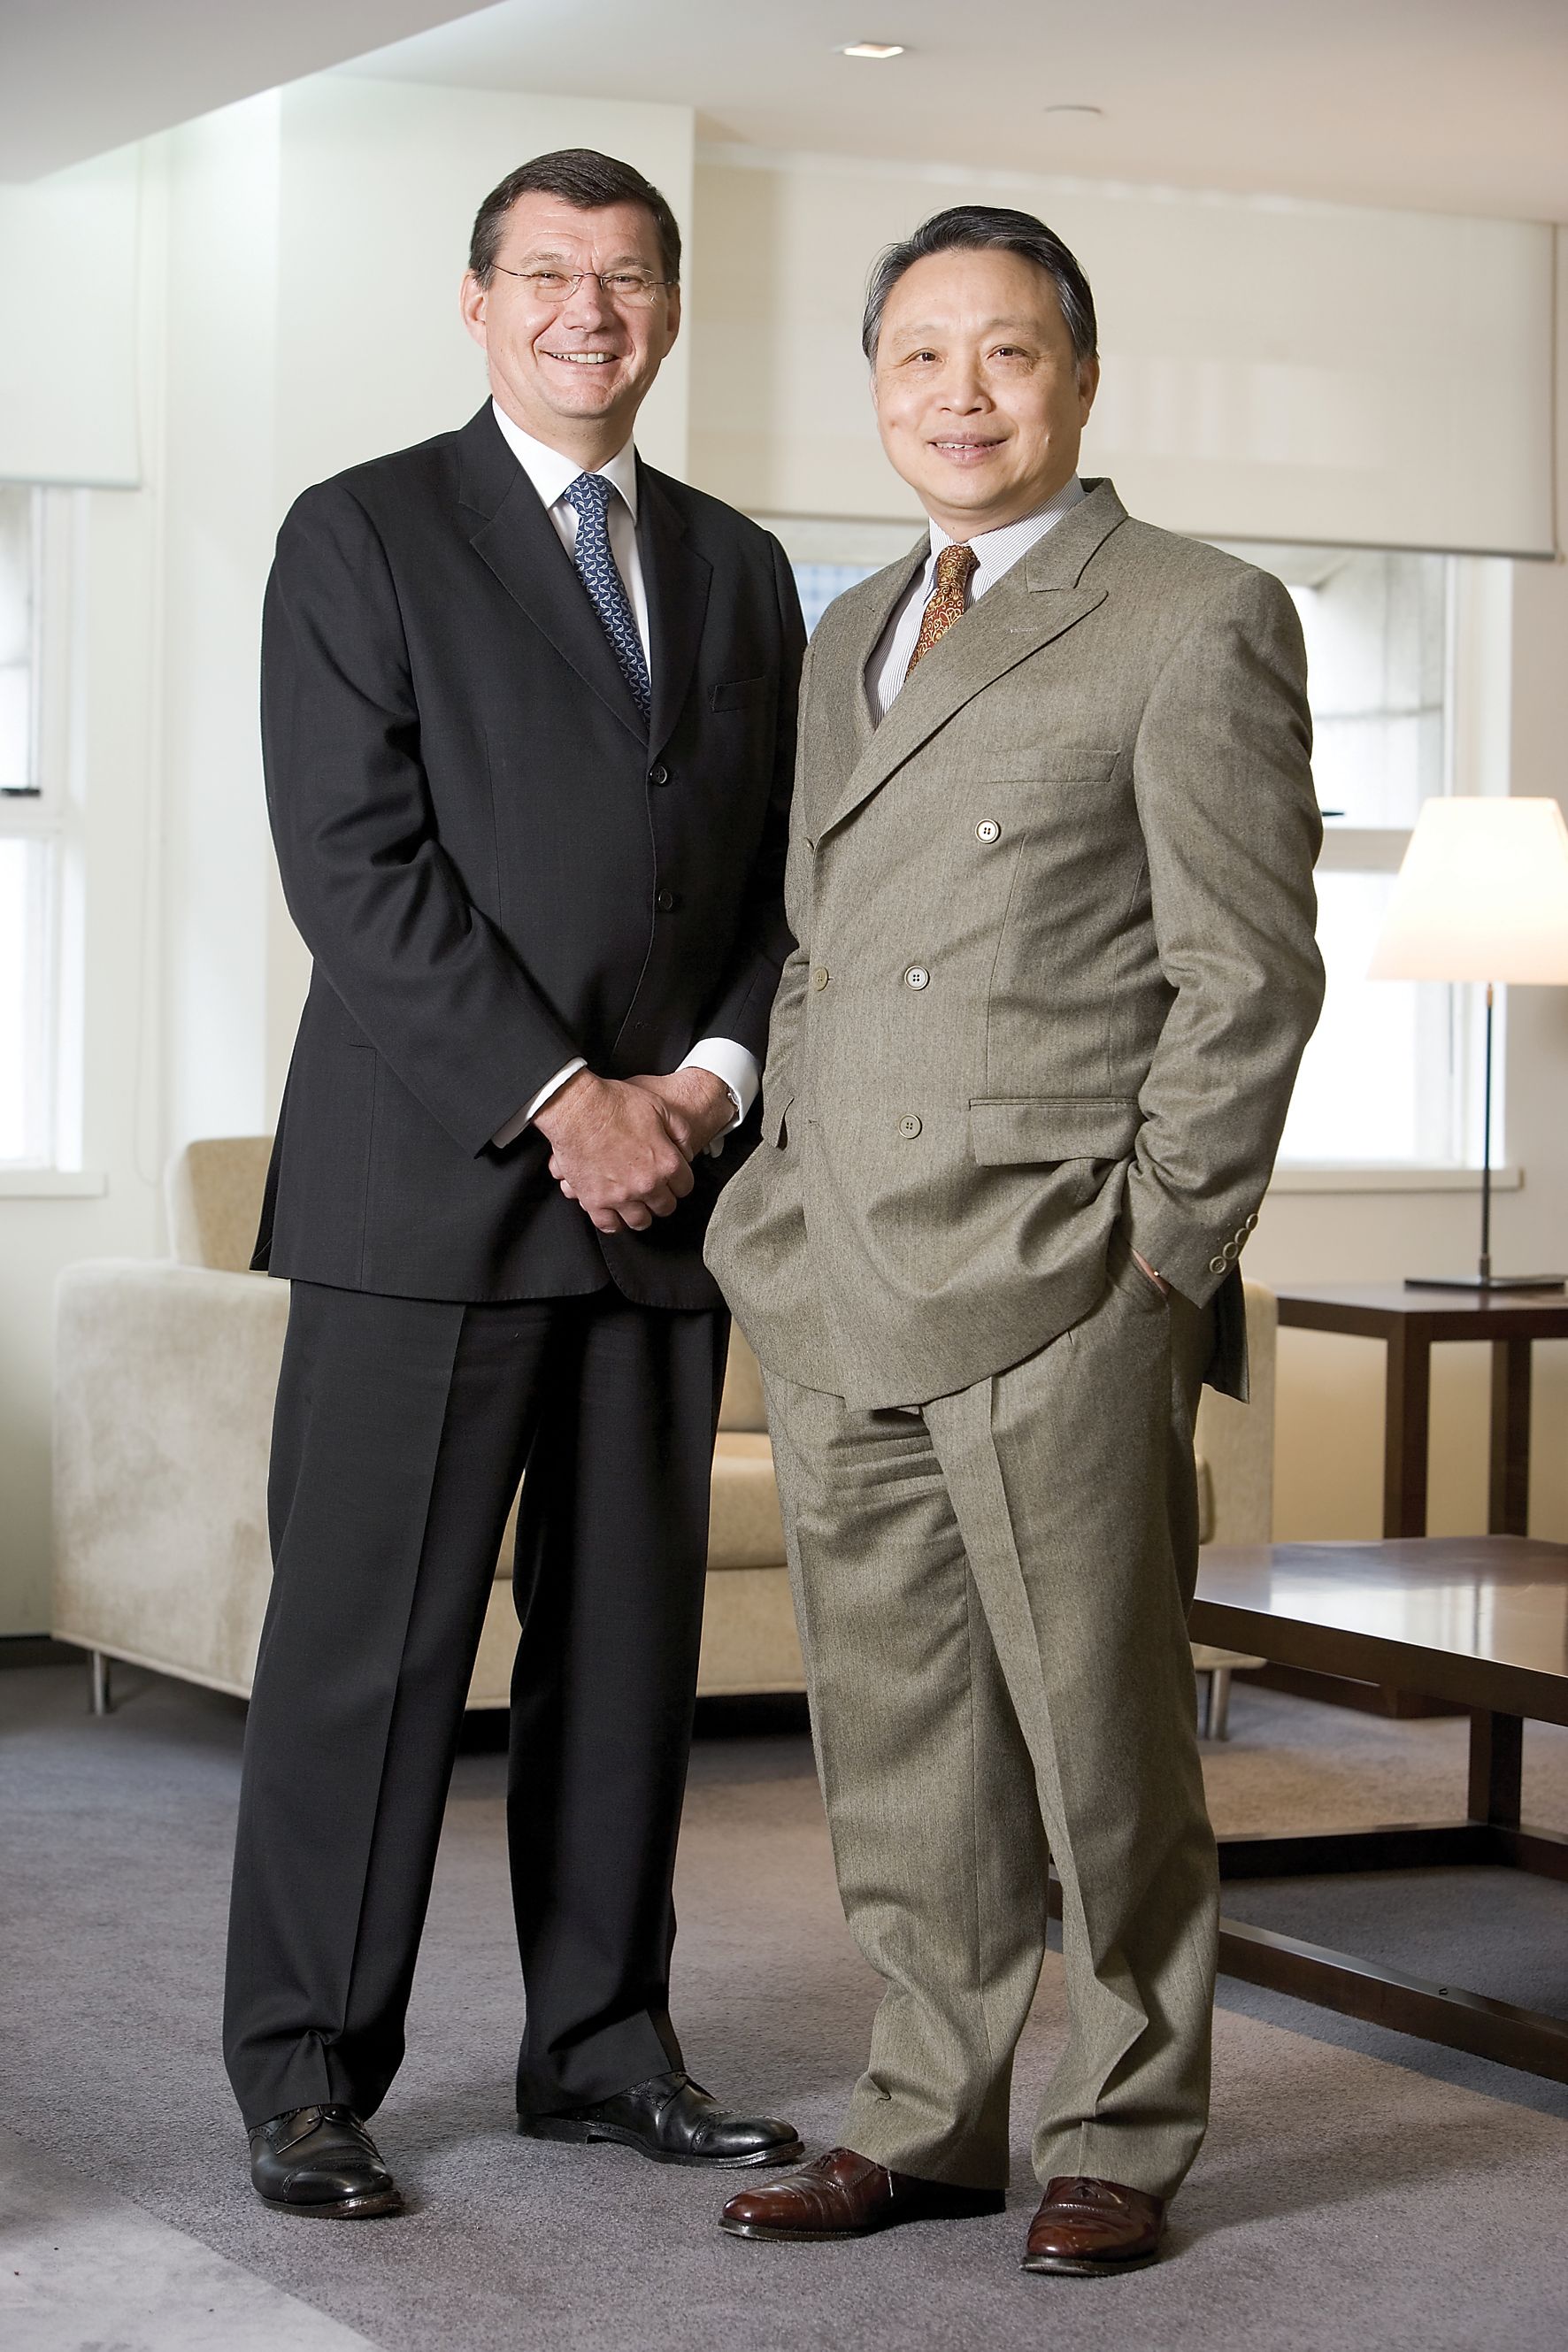 Joint chairmen 2003-2007, John Harrison & Dominic Ho